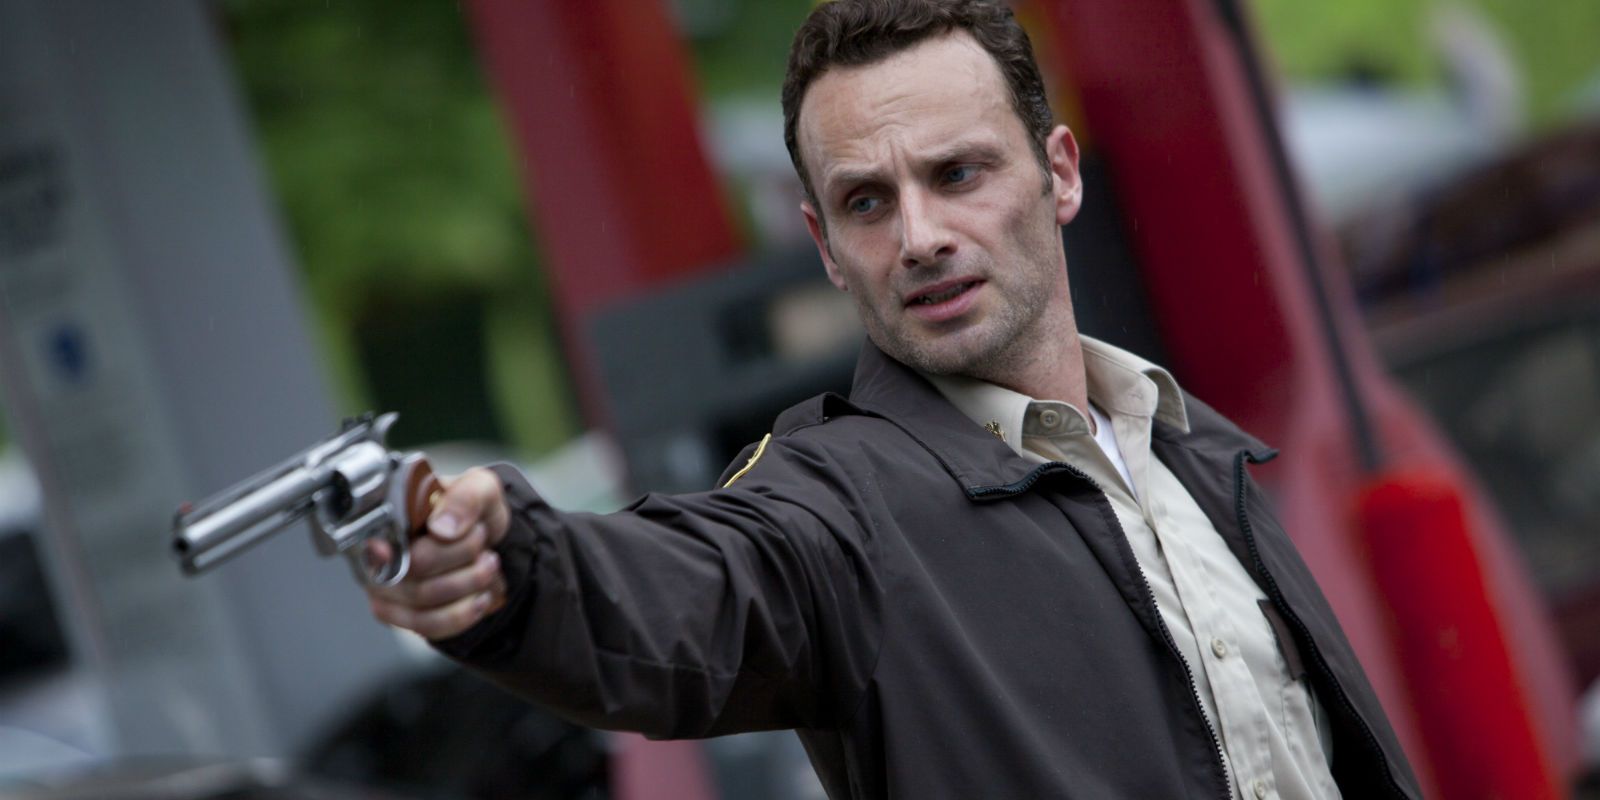 Rick Grimes pointing a gun in The Walking Dead season 1.